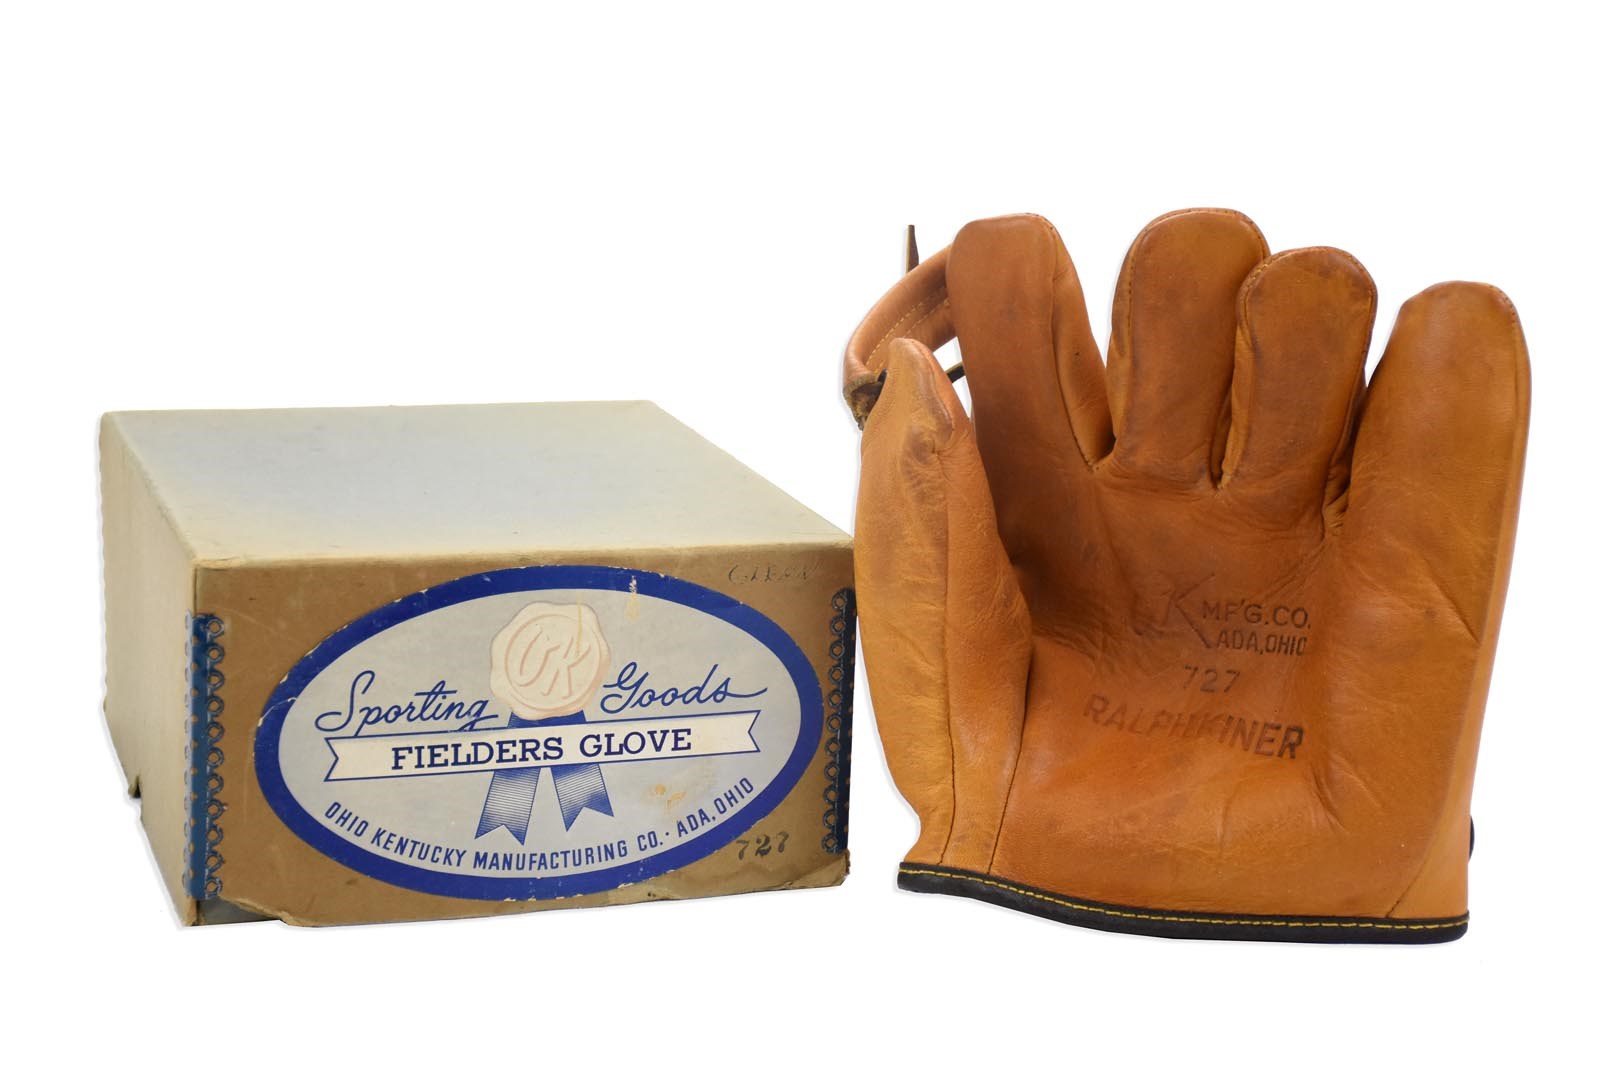 - Ralph Kiner OK No. 727 Sporting Goods Fielder's Glove in Original Box